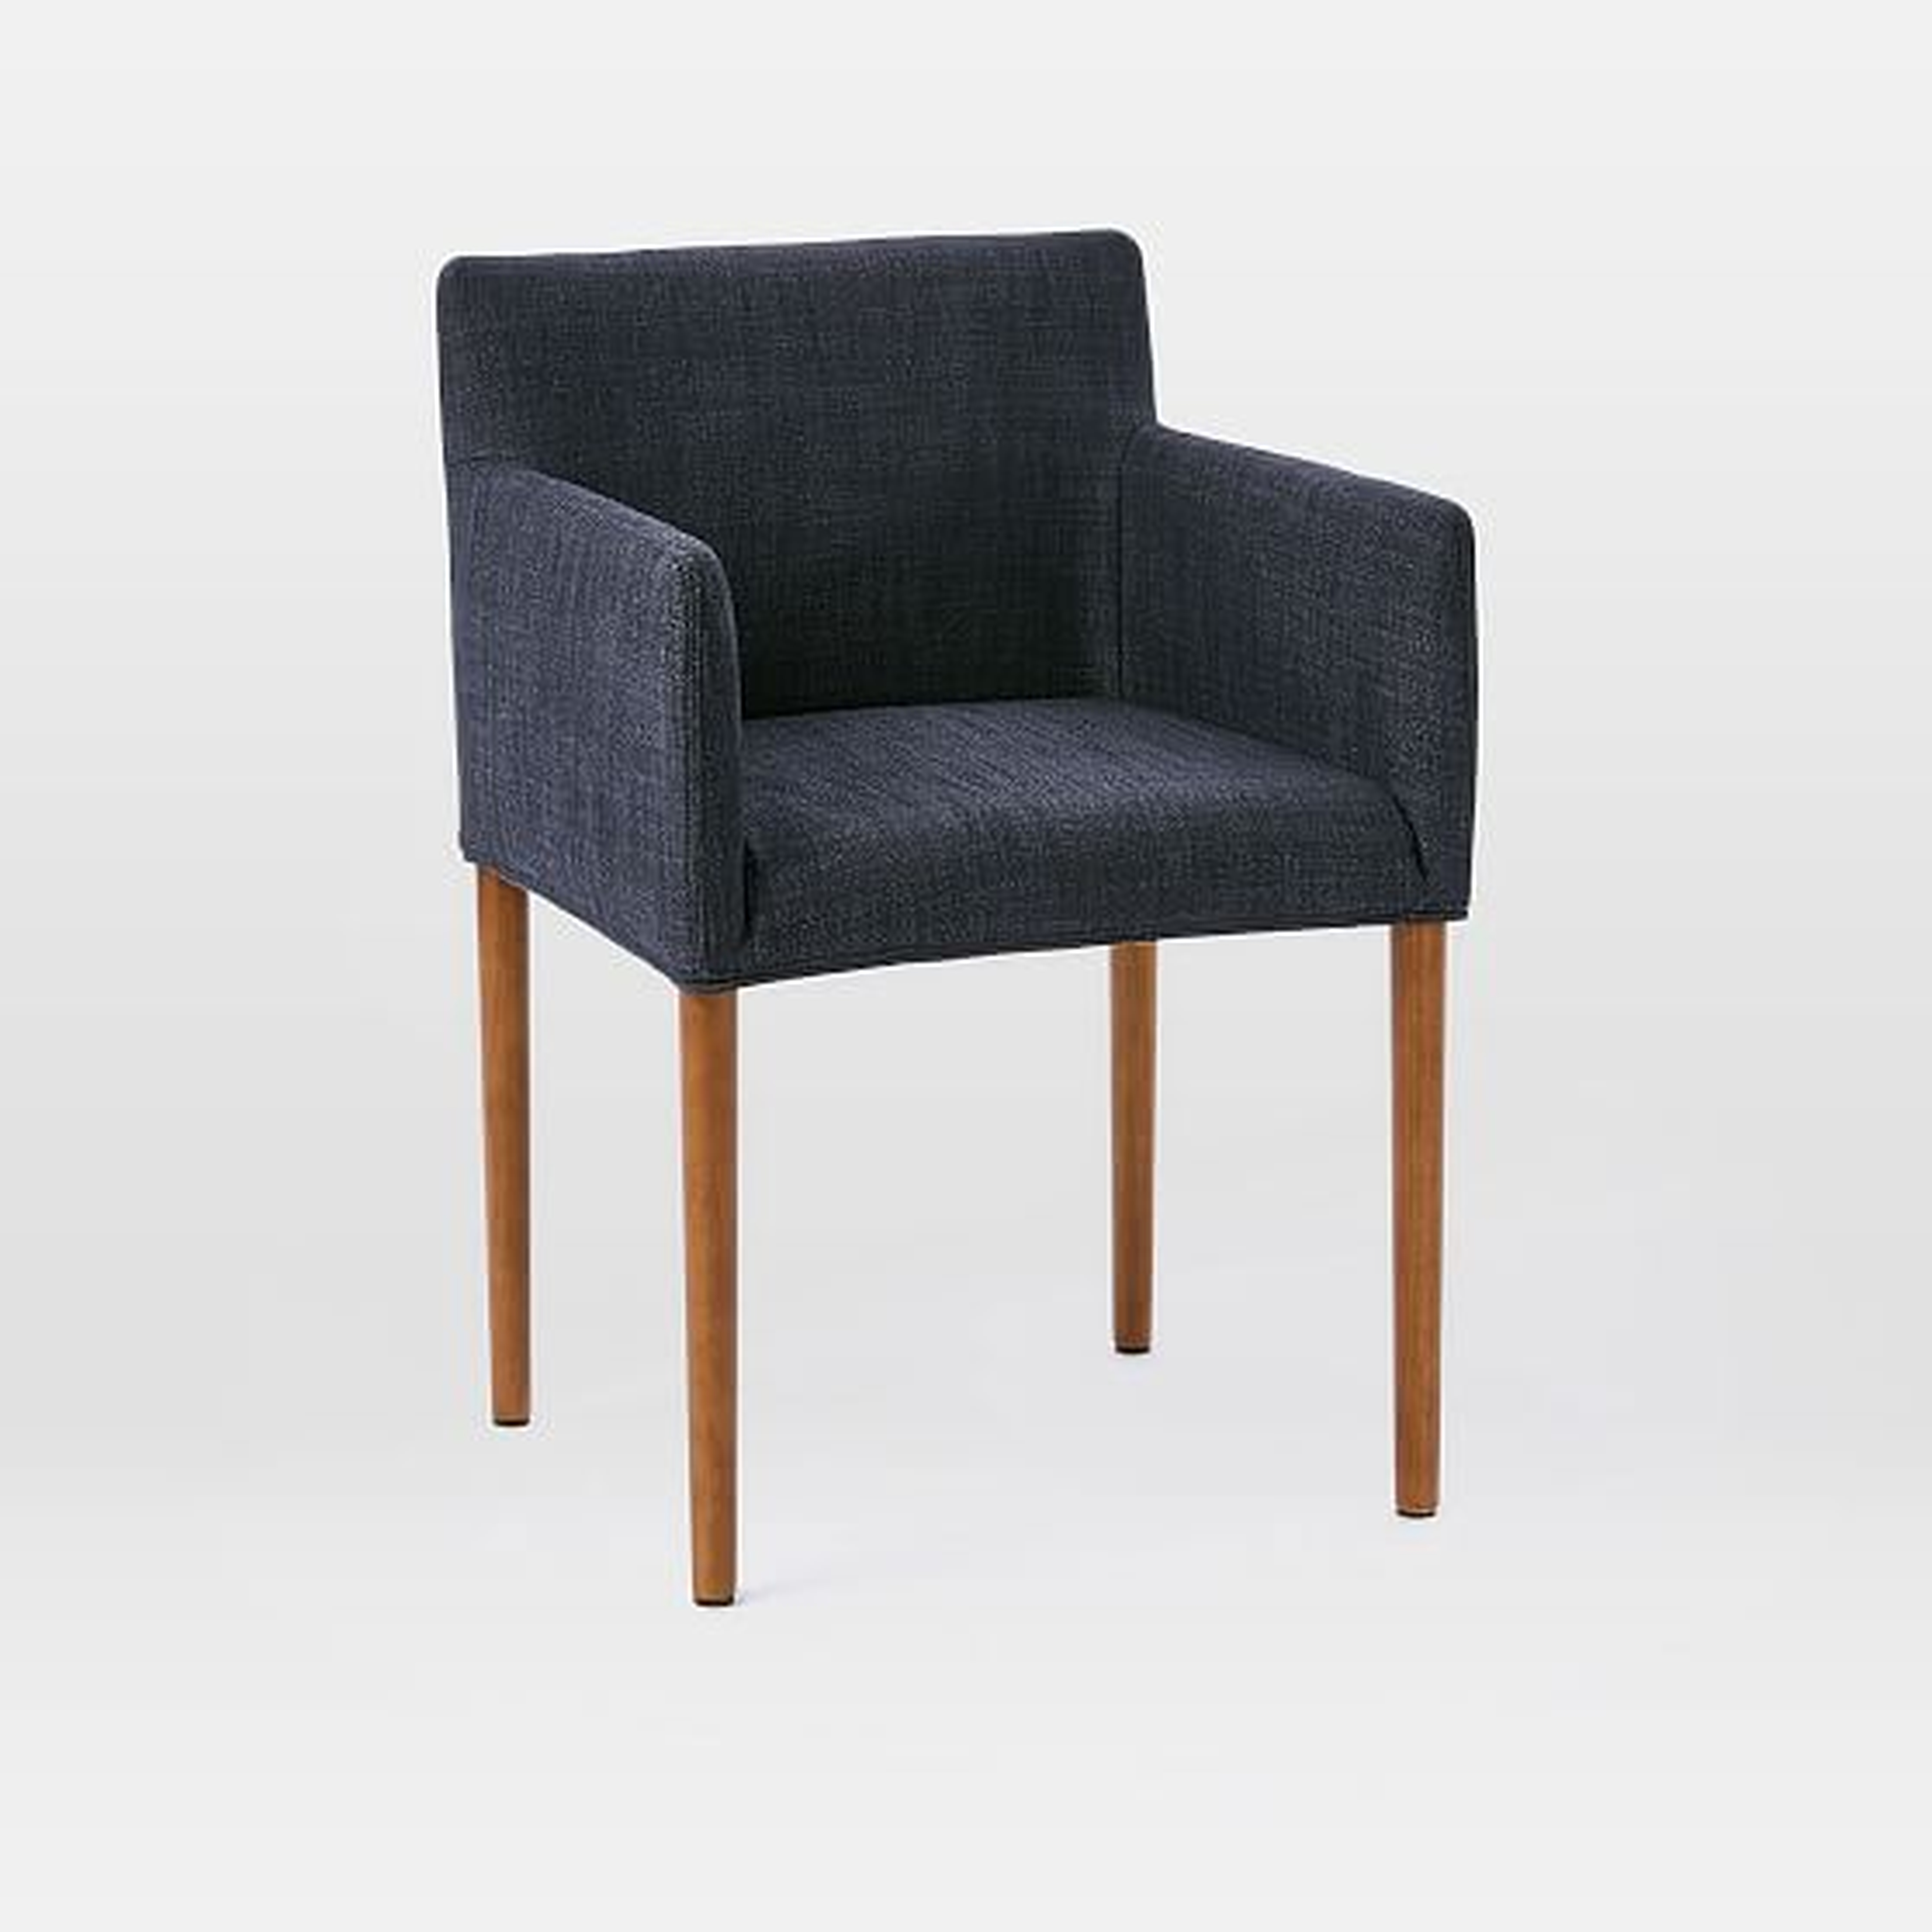 OPEN BOX: Ellis Upholstered Arm Chair, Yarn Dyed Linen Weave, Indigo, Pecan - West Elm